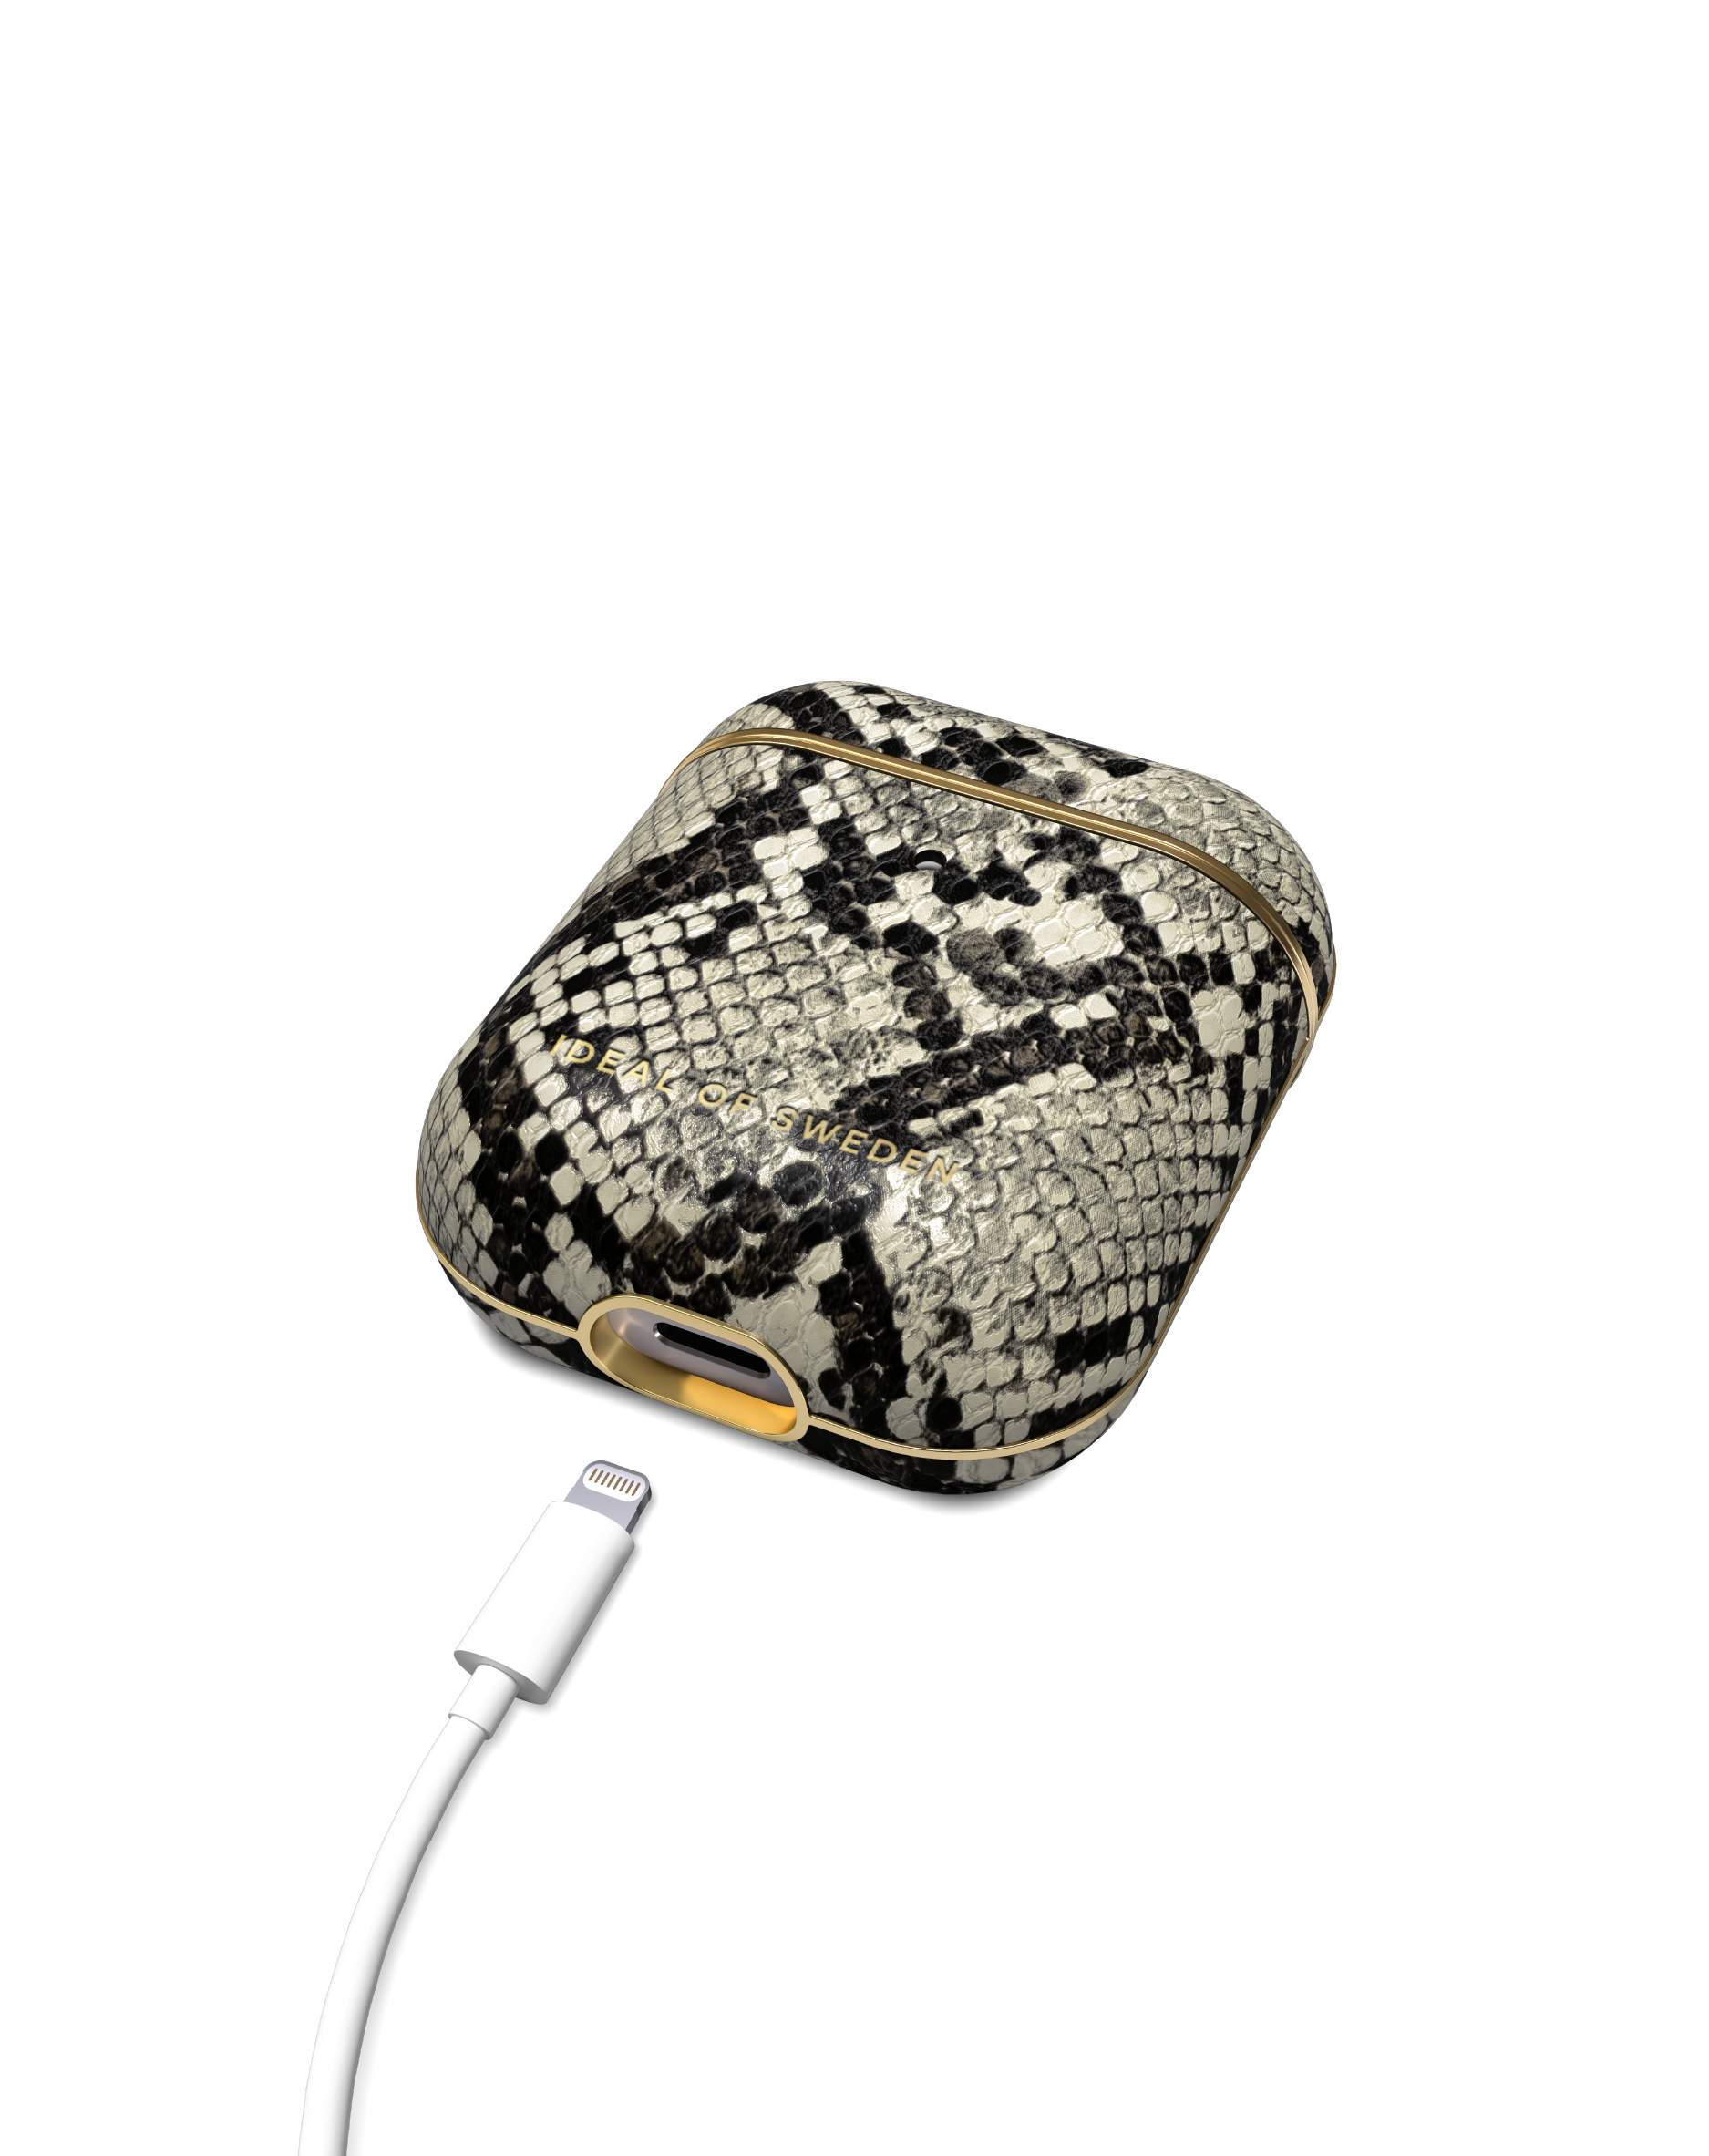 OF Cover IDFAPC-203 AirPod Apple IDEAL Full passend Case SWEDEN Python Desert für: